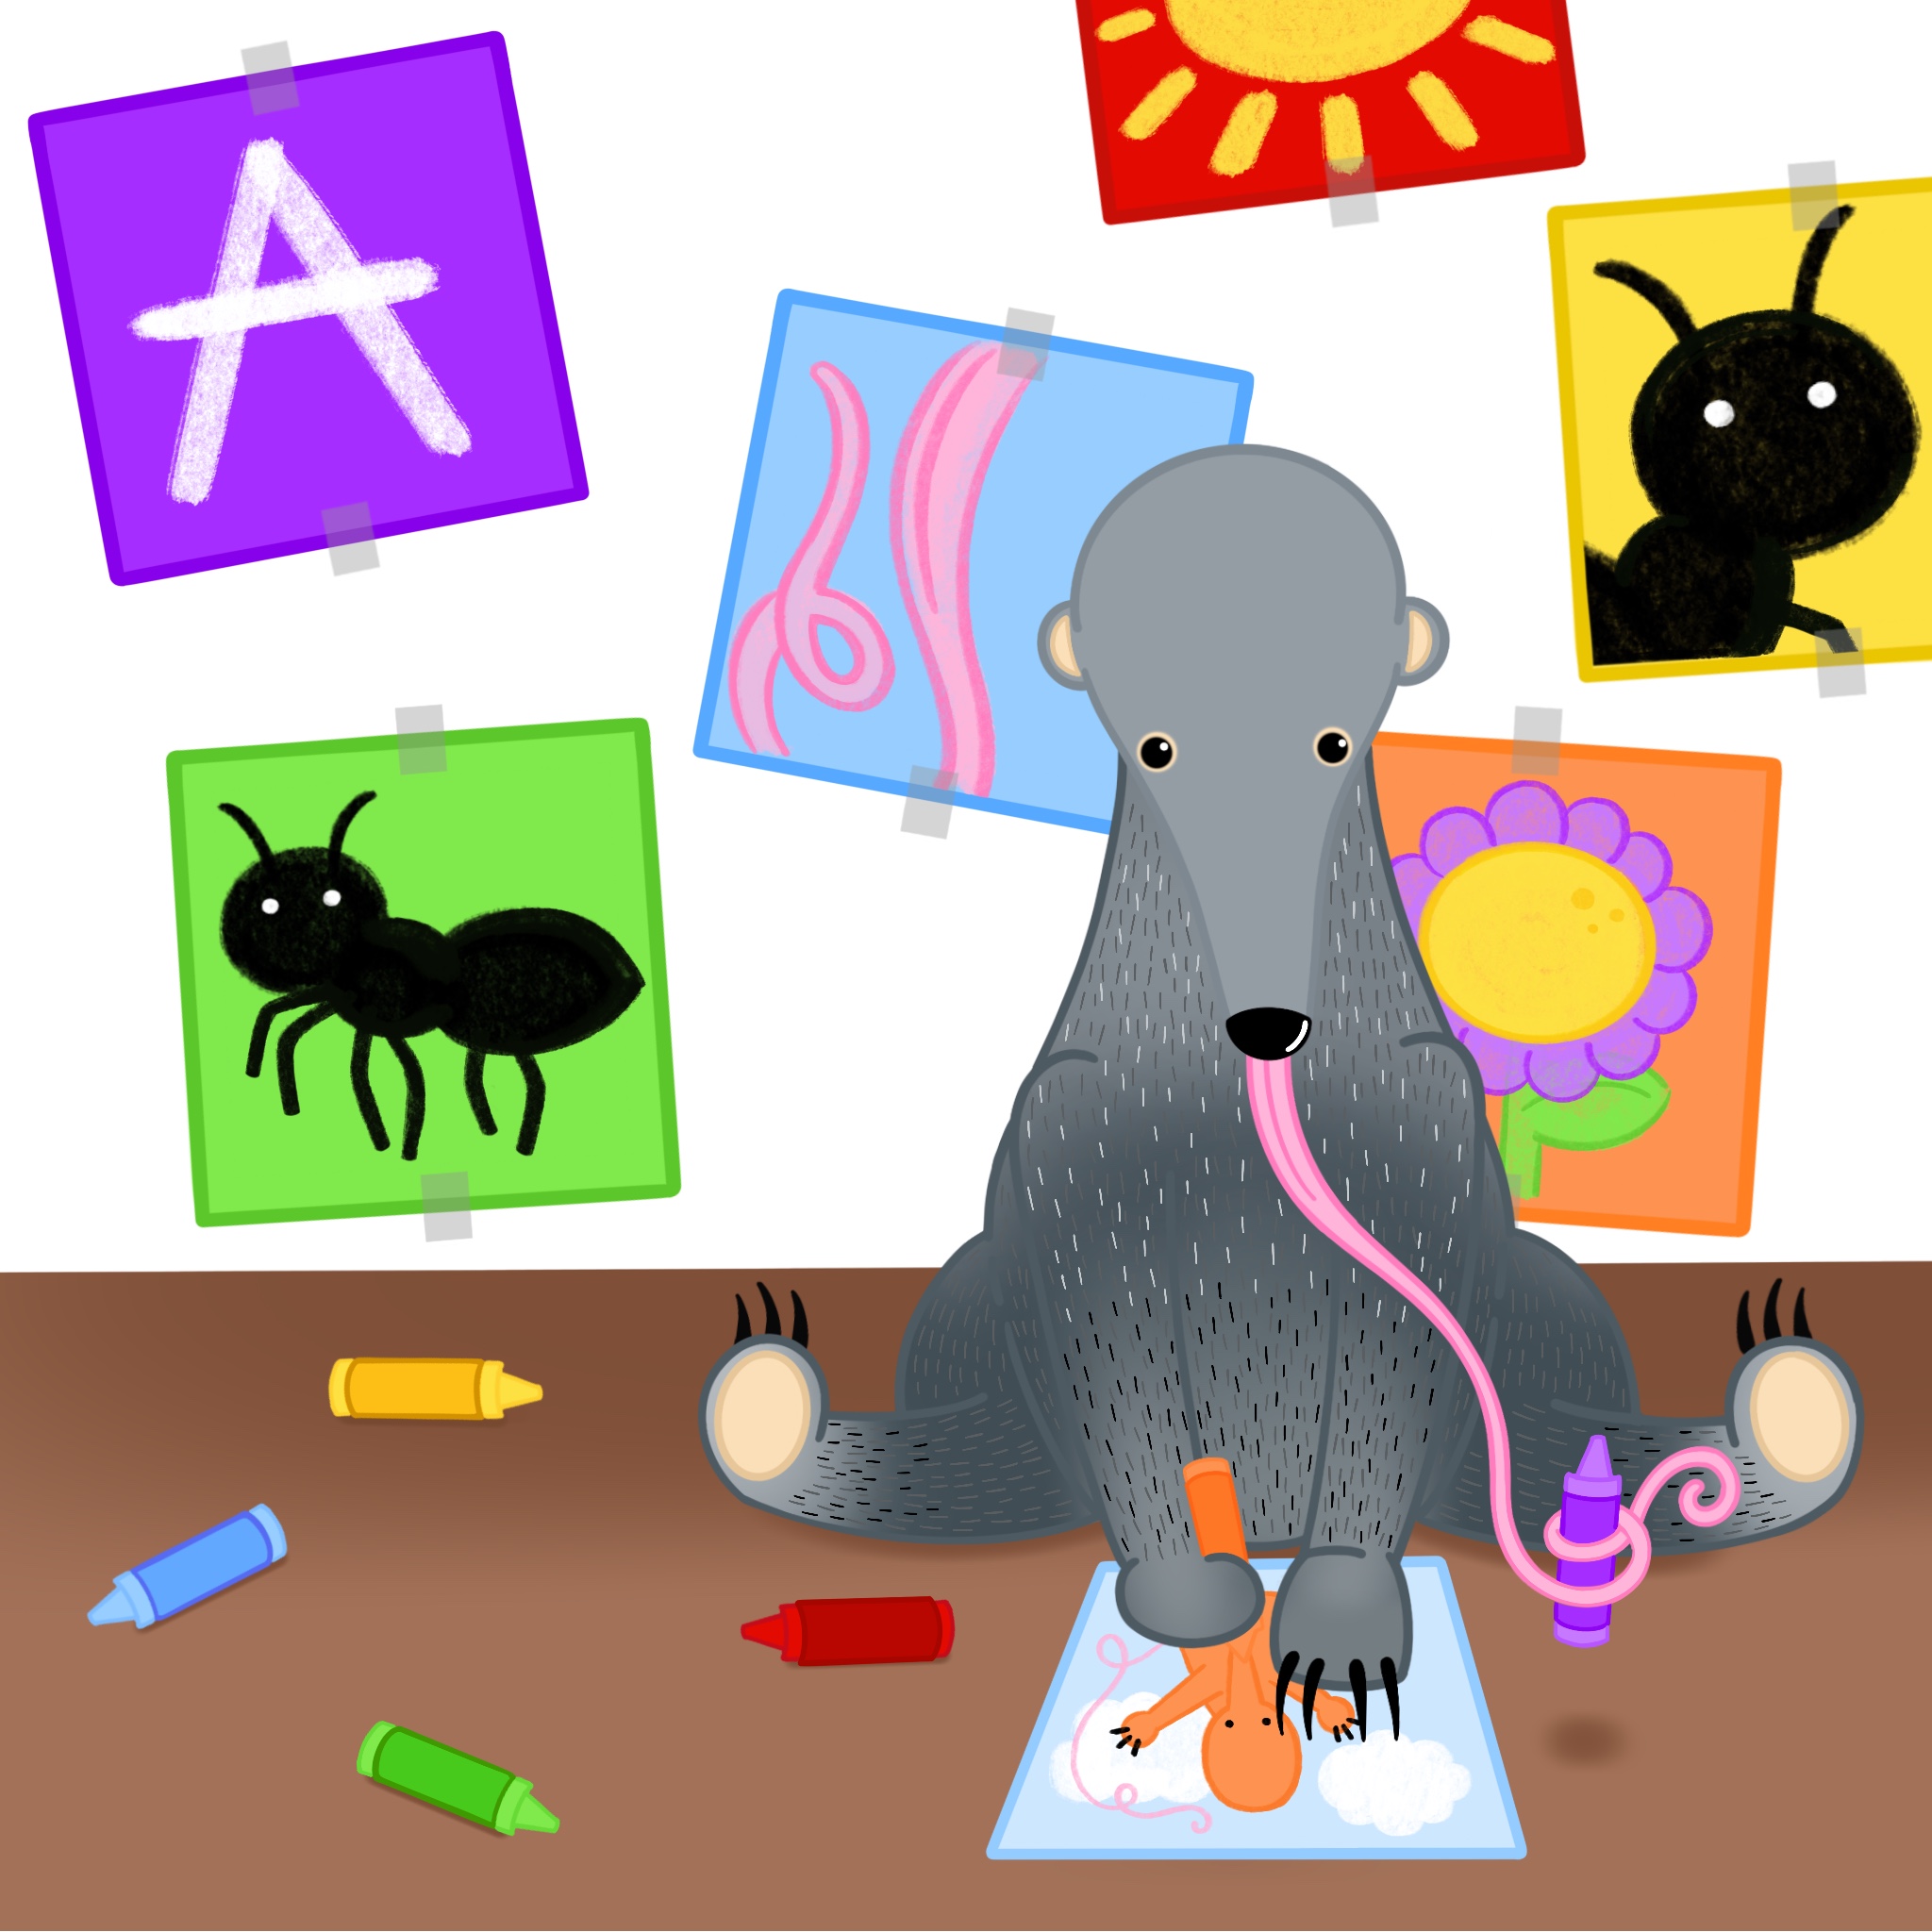 Artistic Anteater digital illustration.